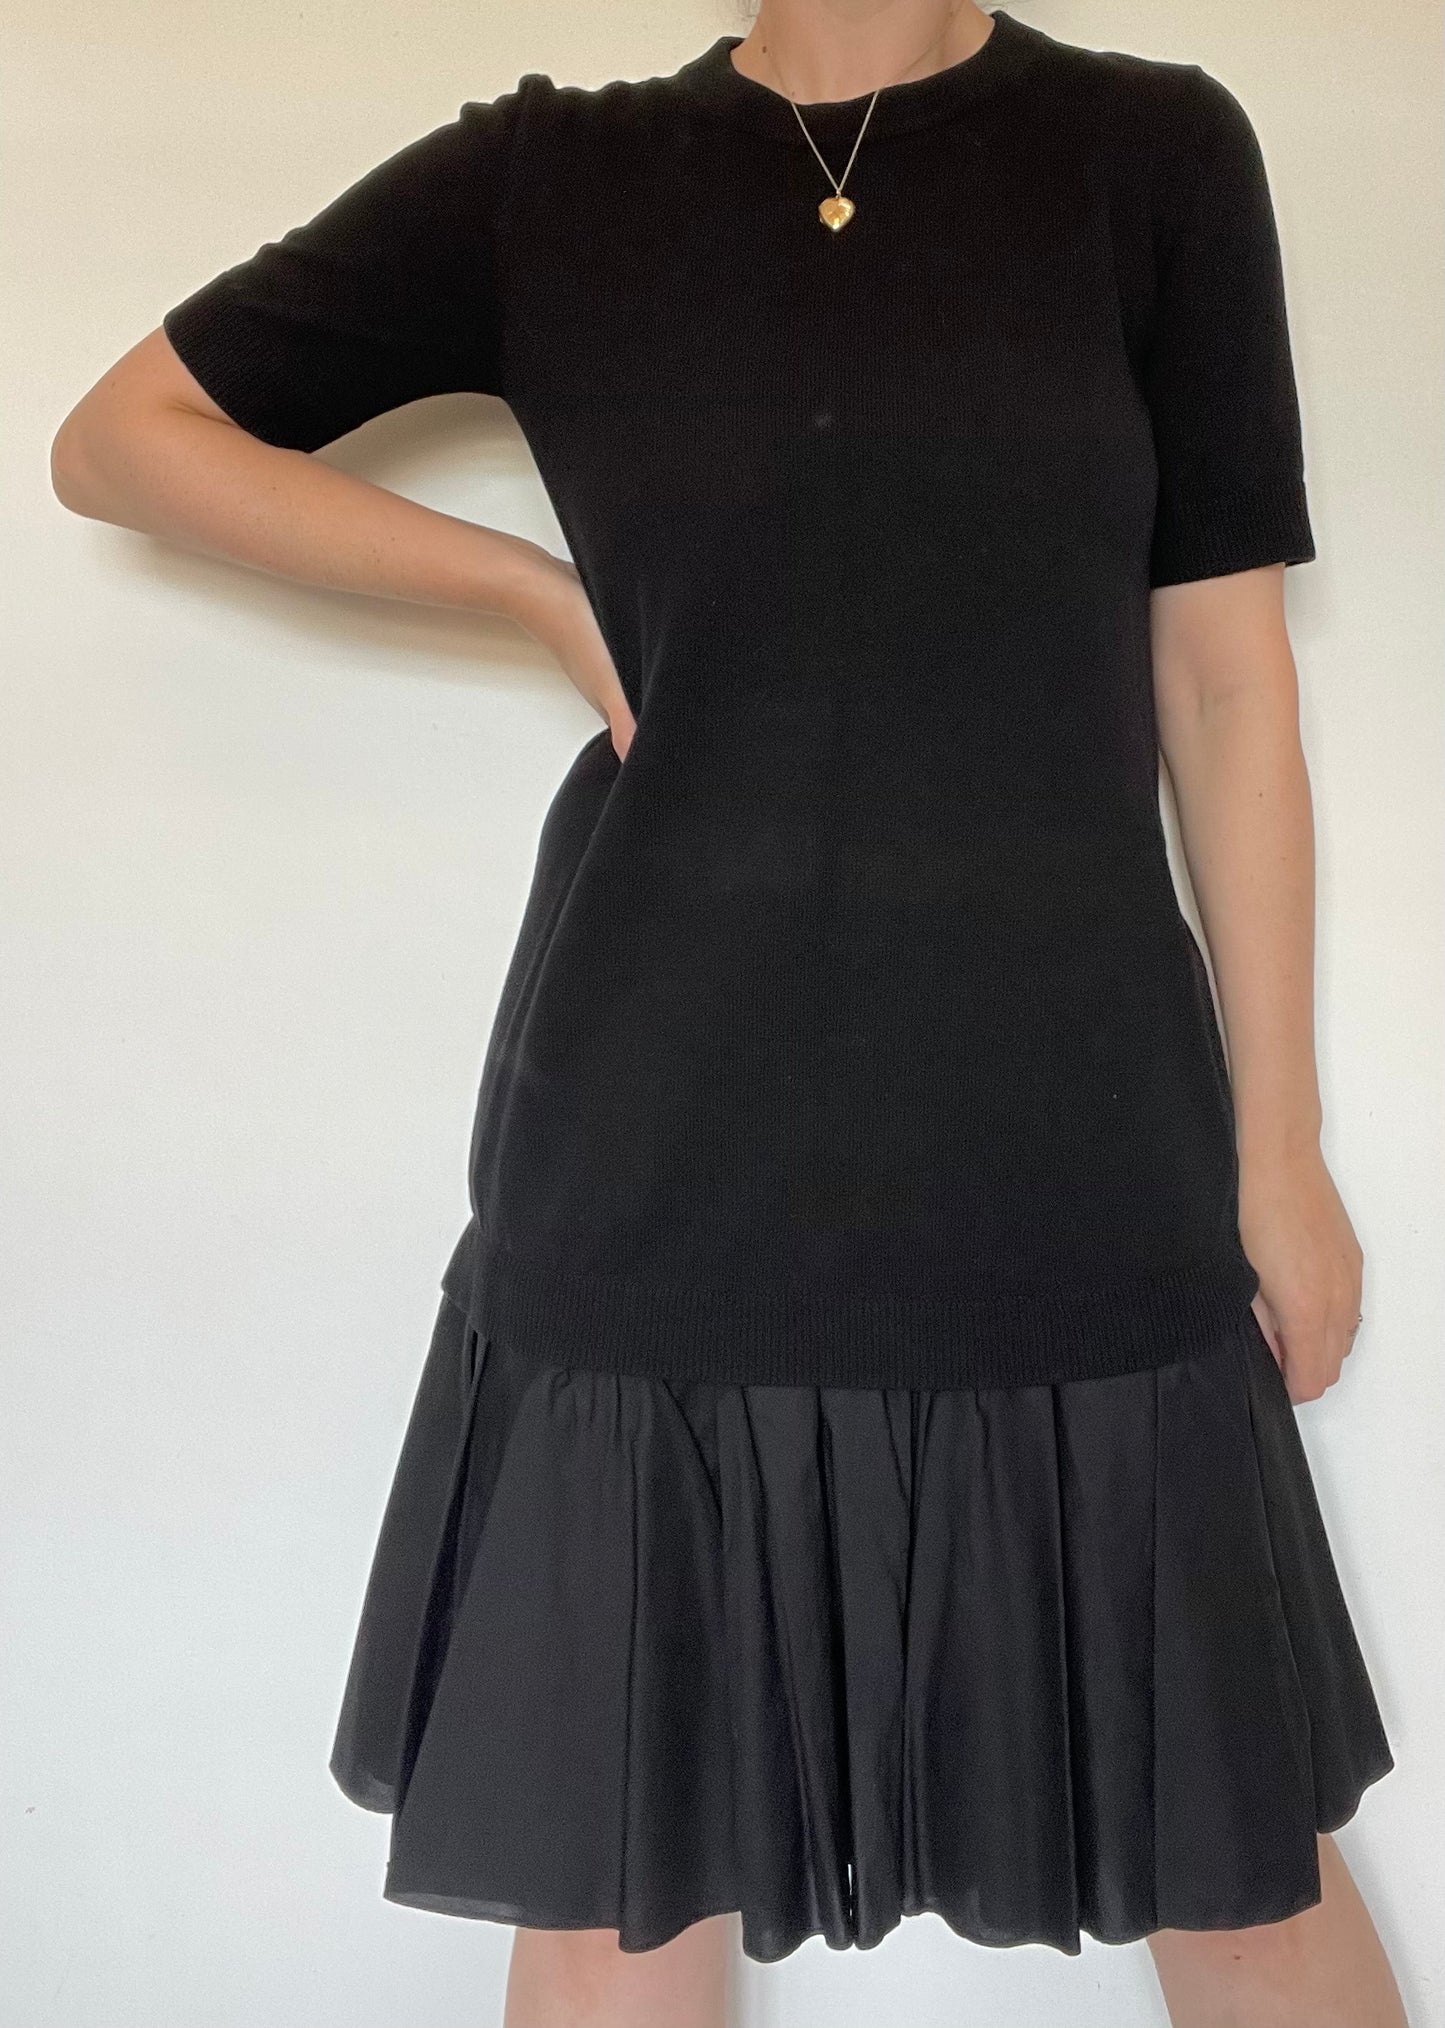 COS Black Knit Dress